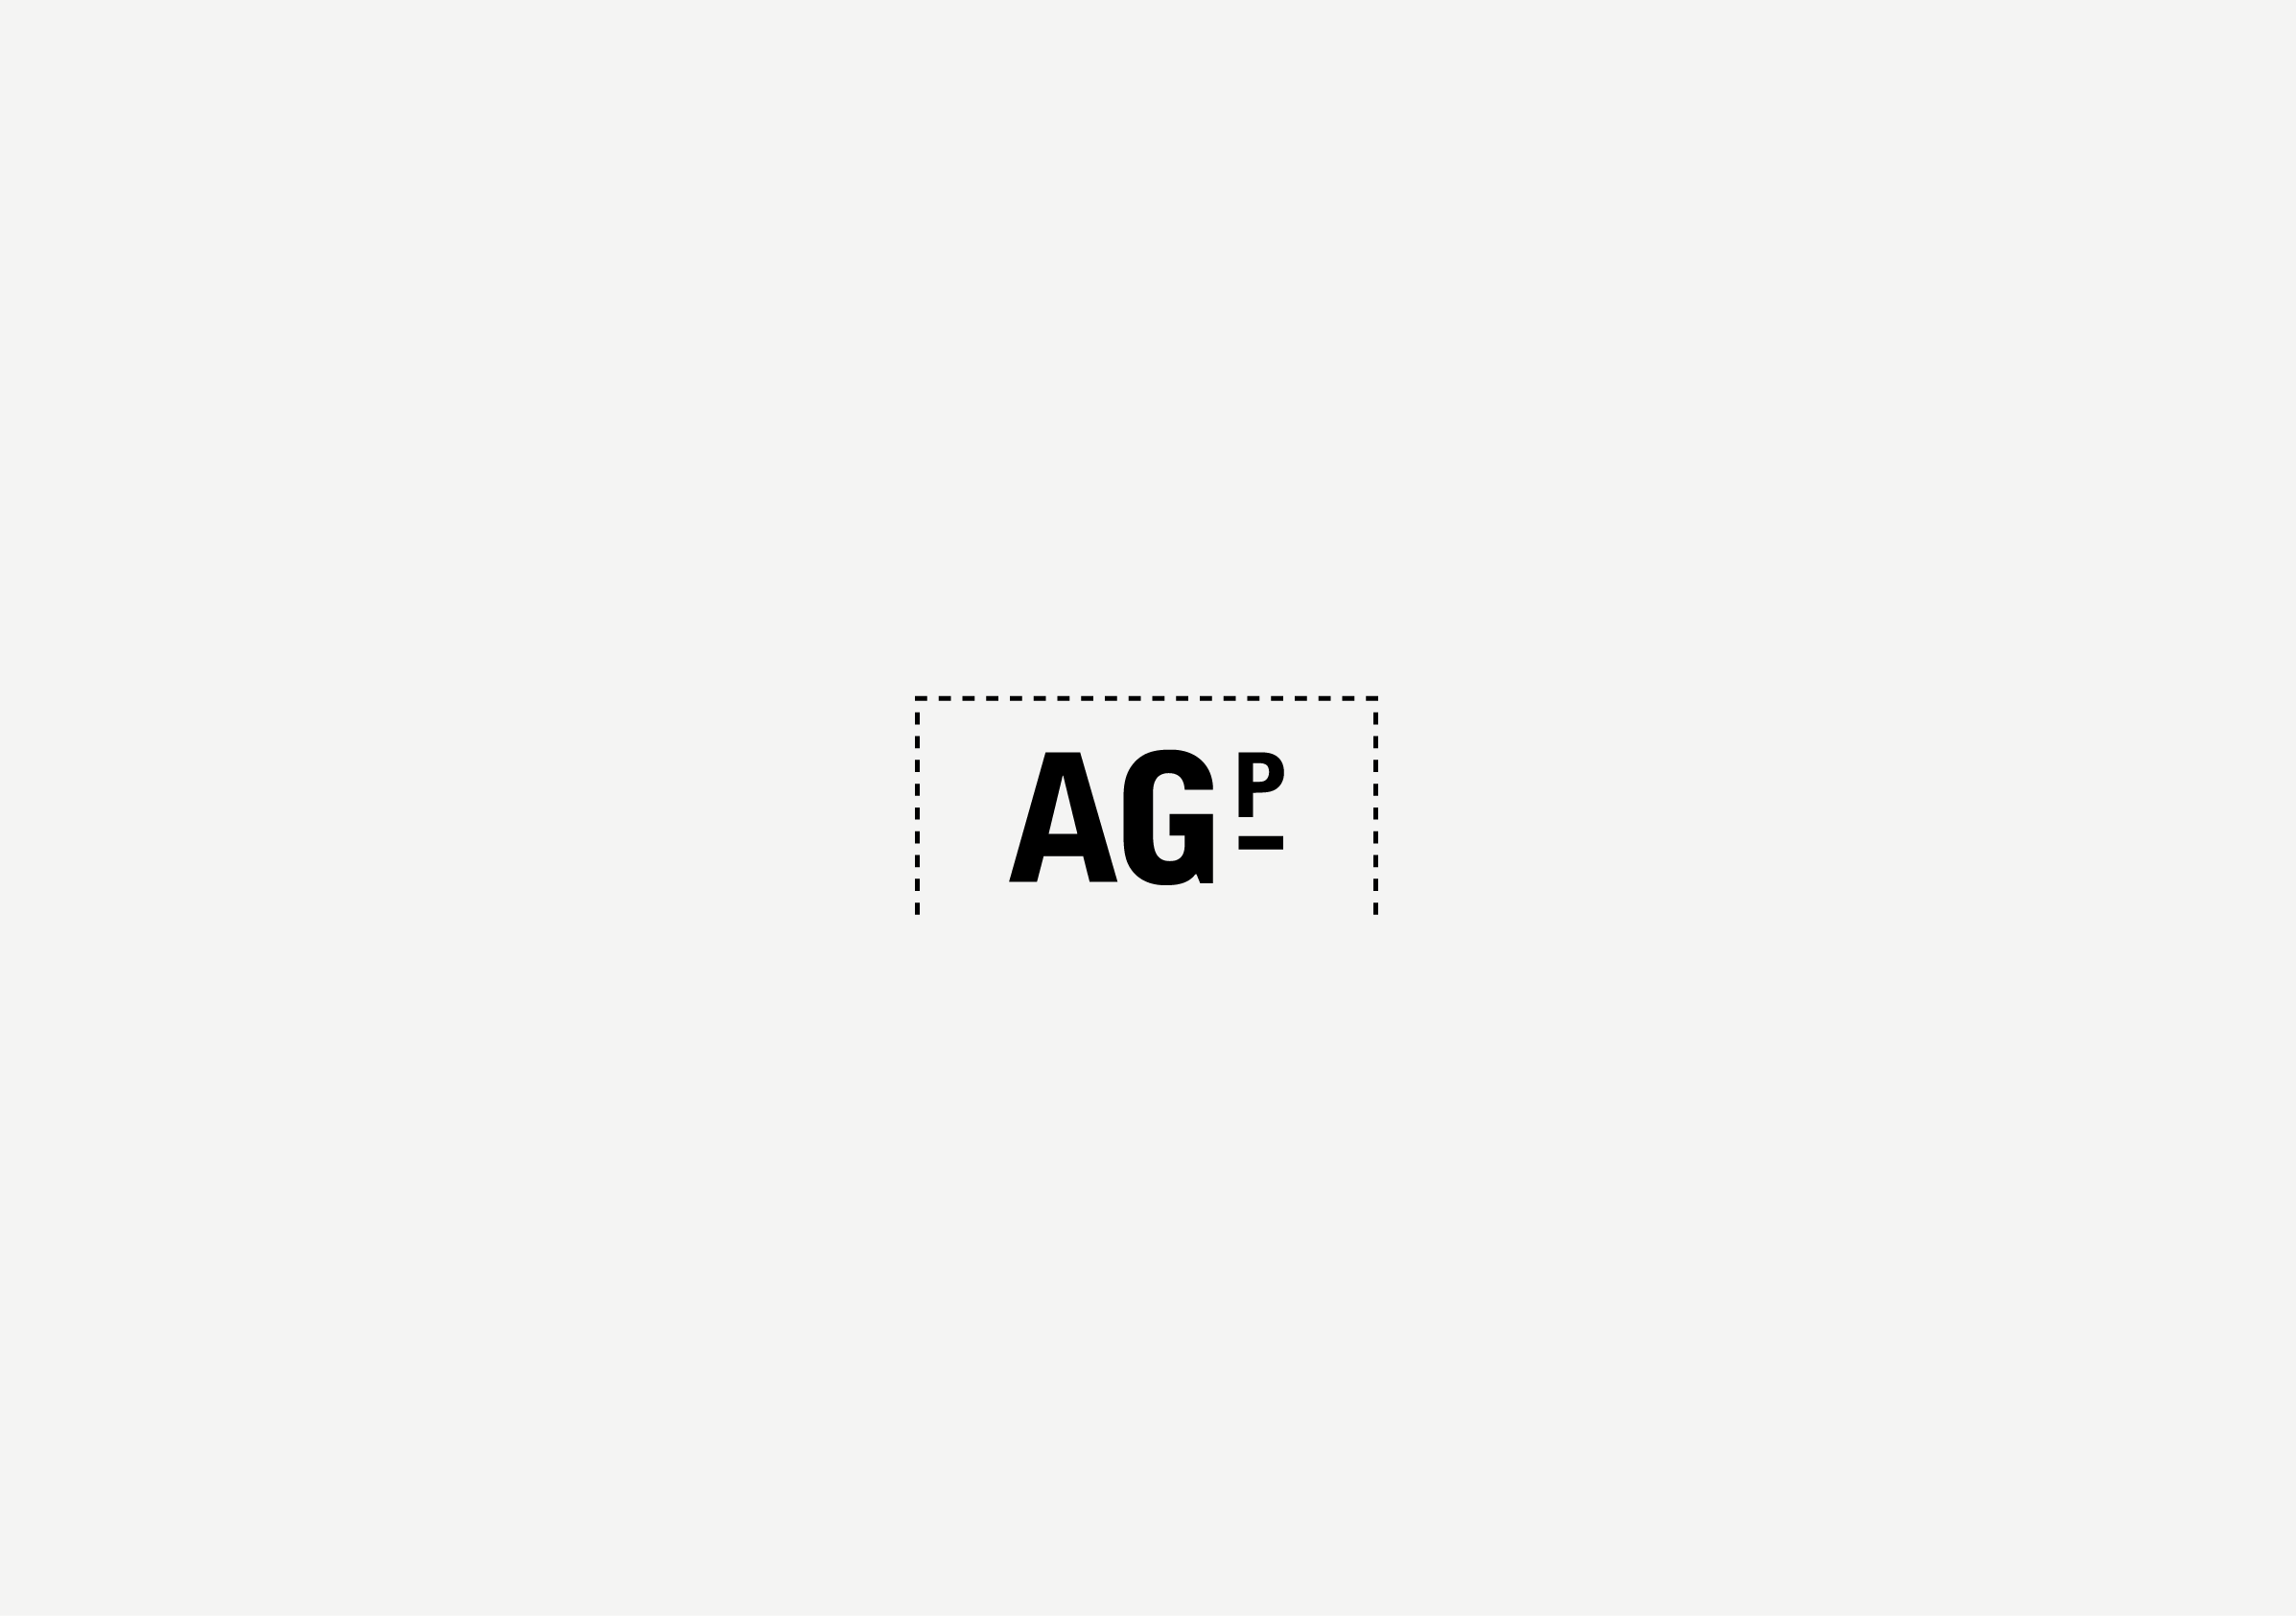 Branding for Abergel Goldstein & Partners, an Ottawa law firm, by Graphic Designer idApostle